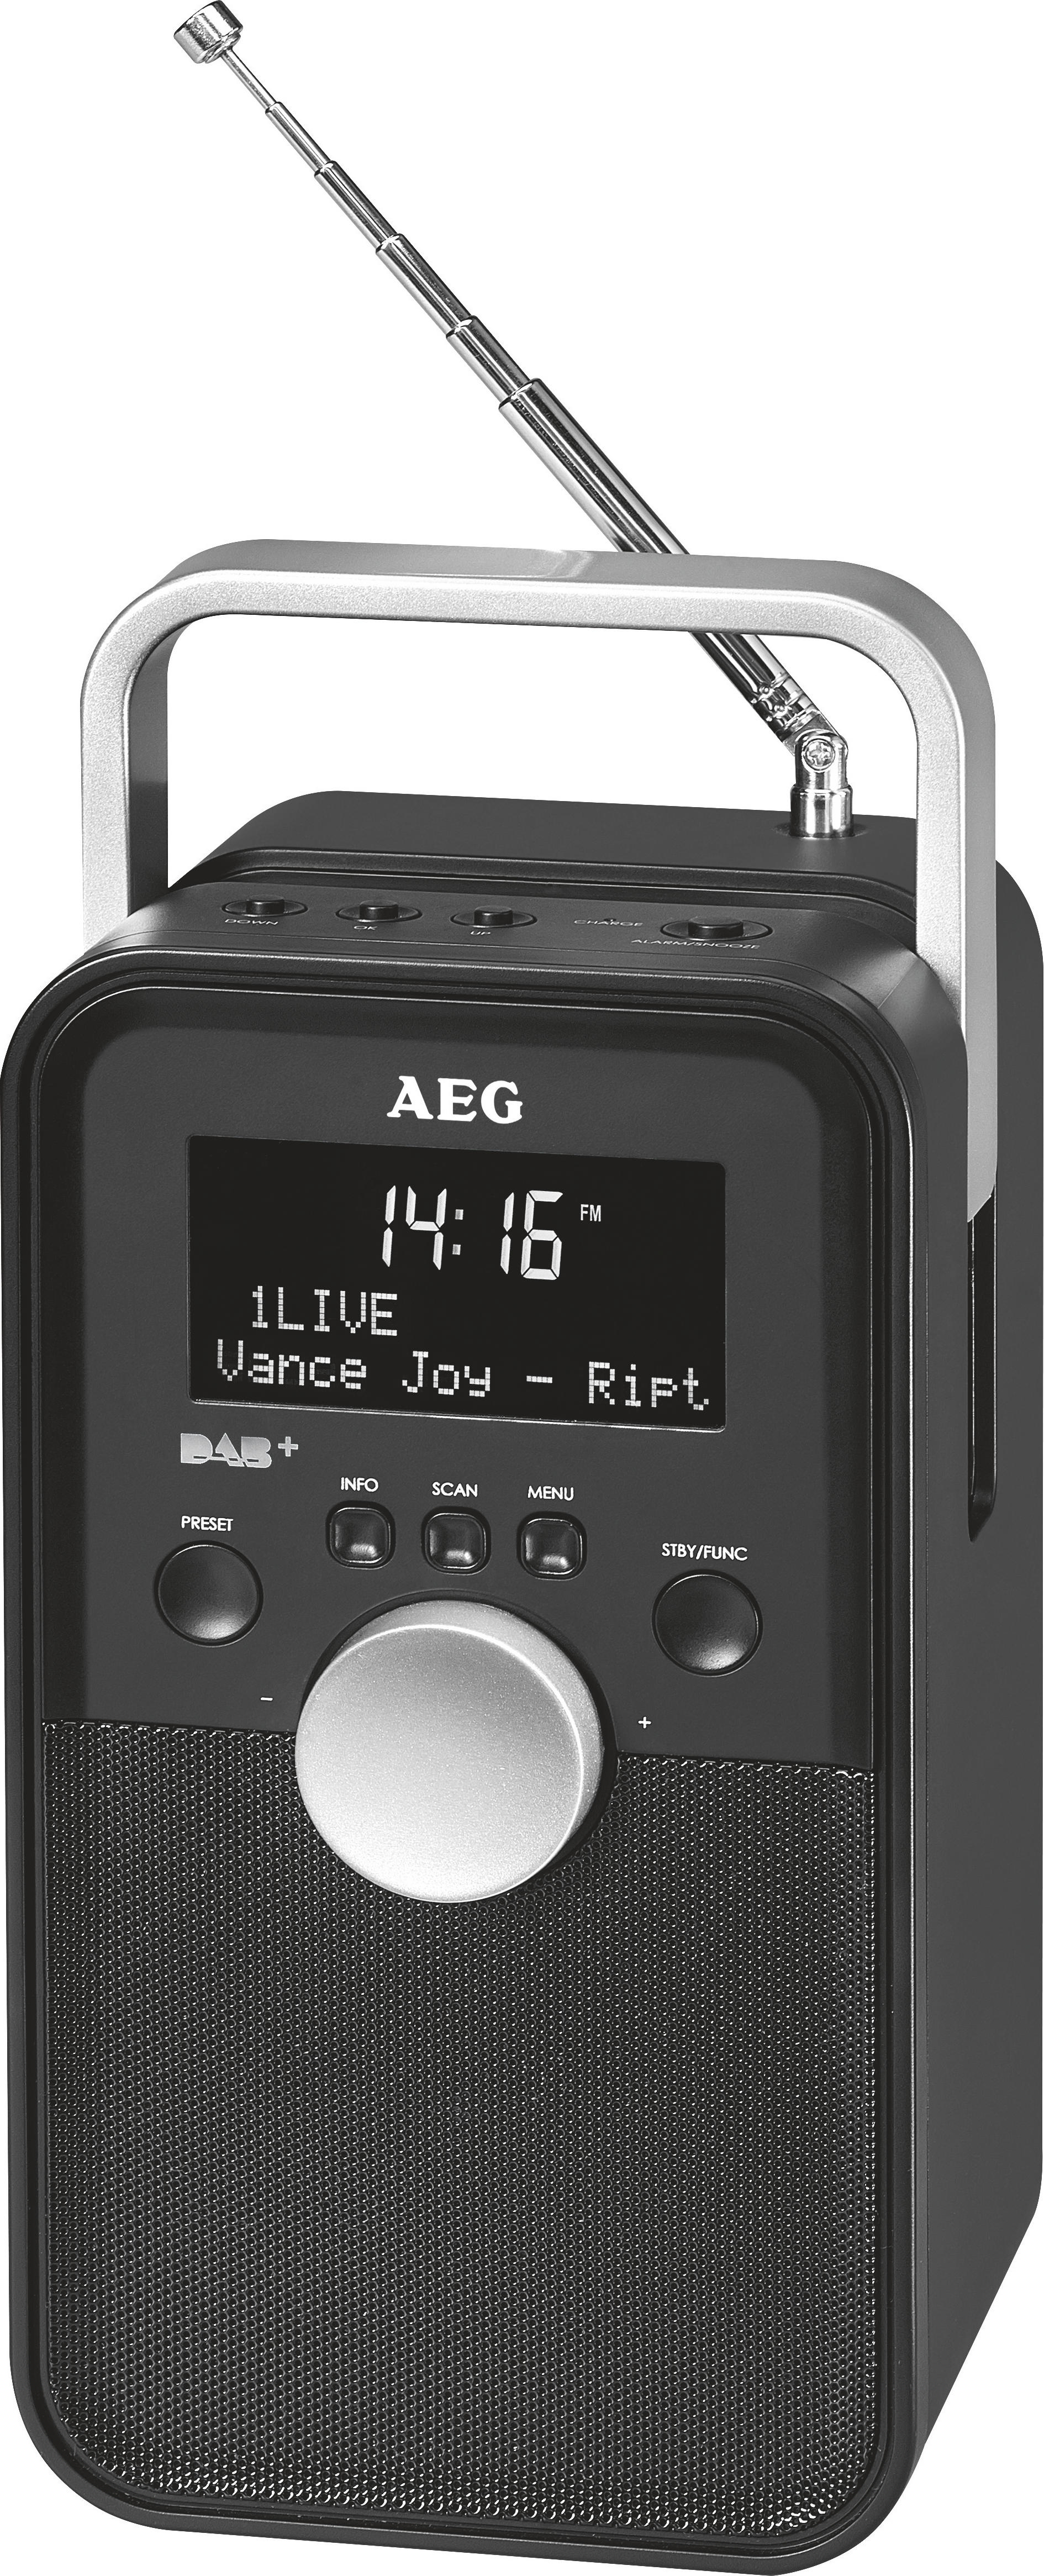 AEG DR 4149 Digitalradio, Schwarz DAB, DAB+, Digital Radio